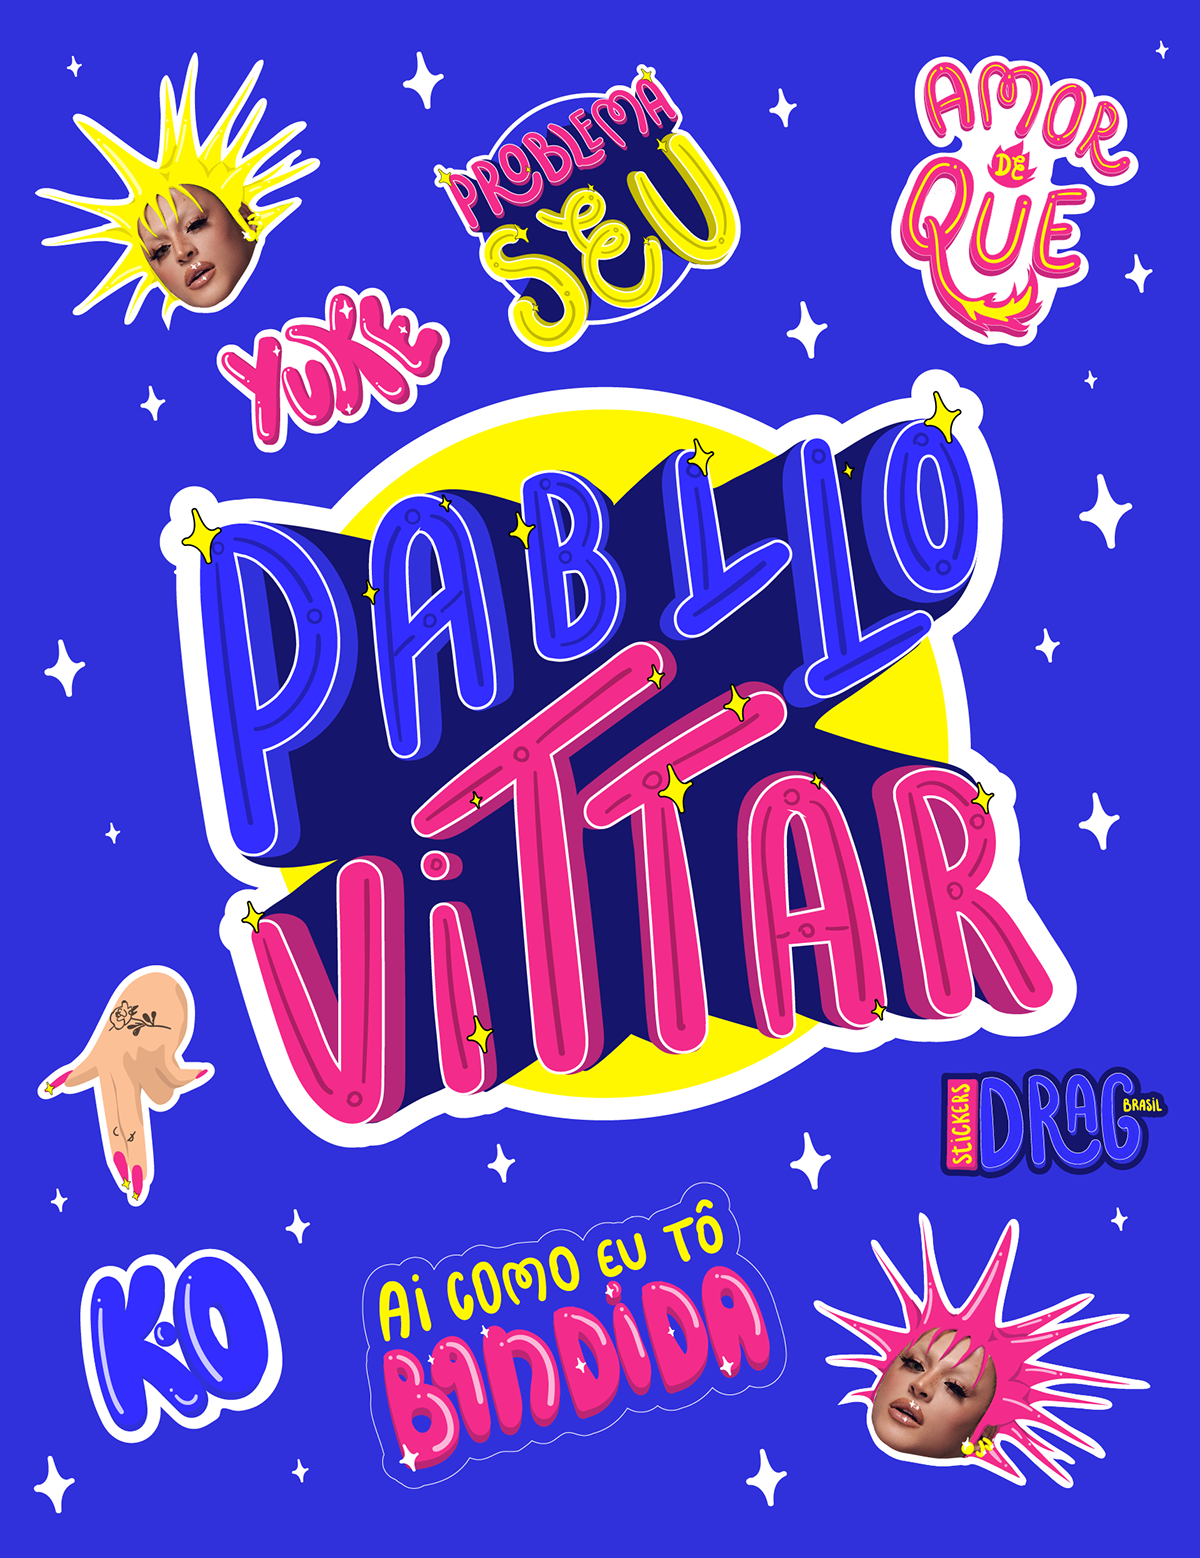 adesivo Brazil Drag drag queen Figurinha pabllo vittar sticker